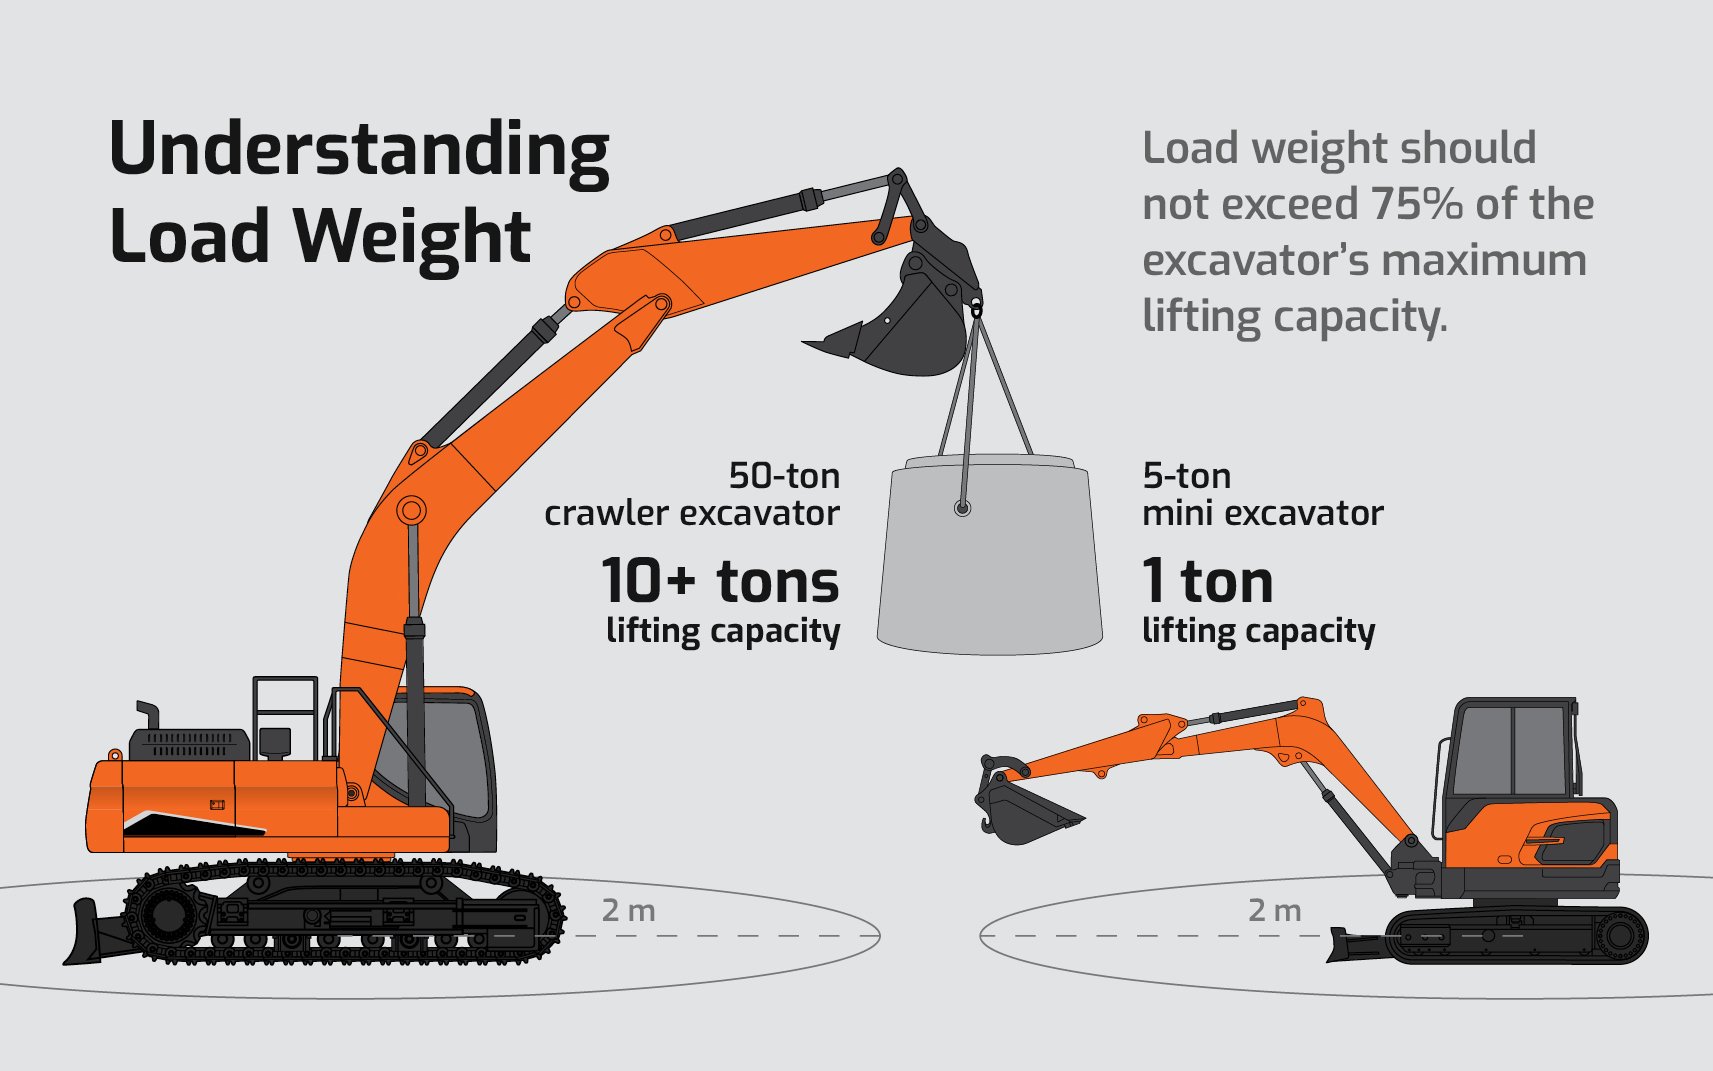 DEVELON crawler excavator and compact excavator lifting capacities.